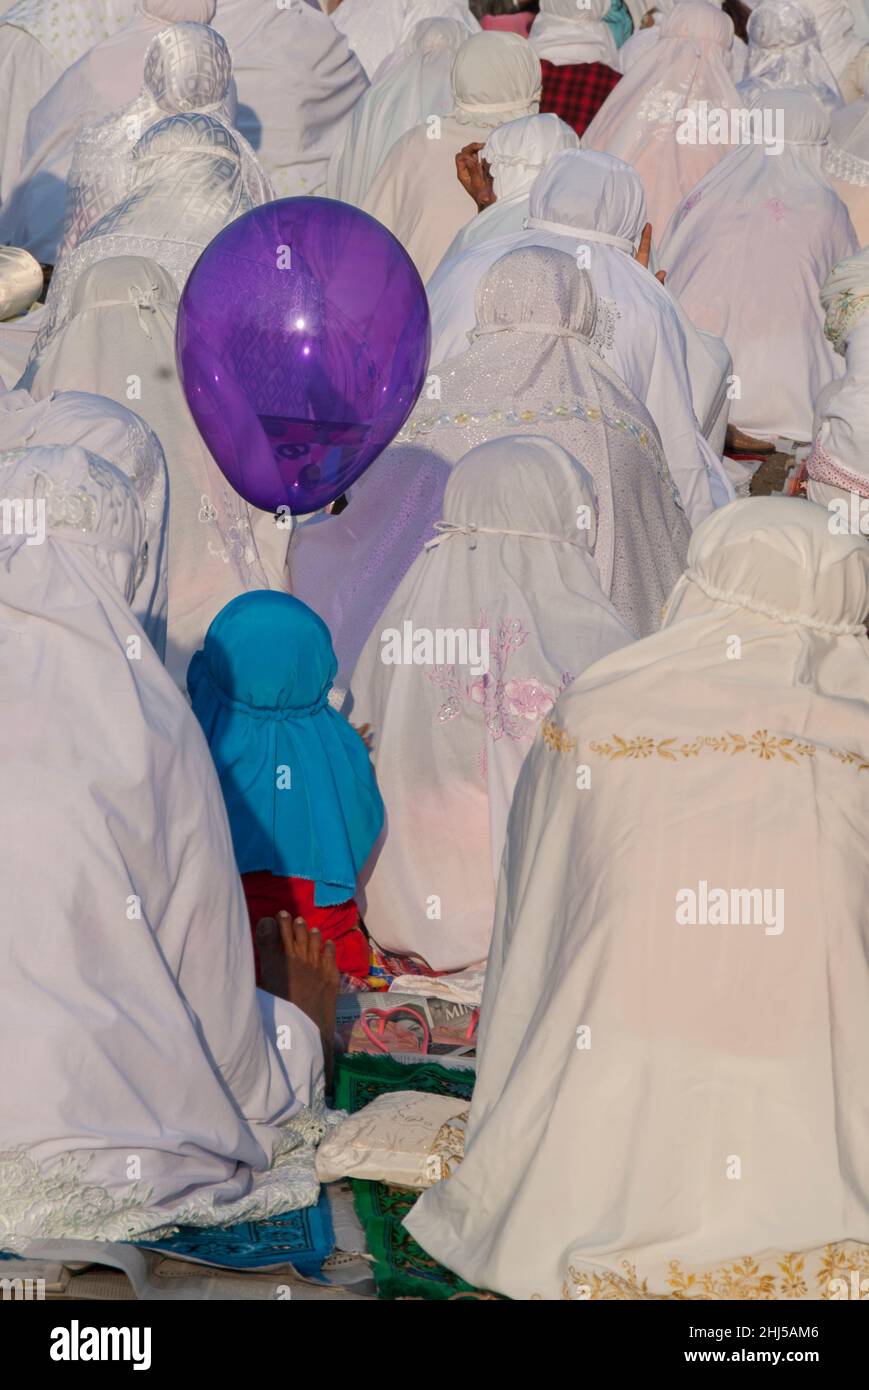 Women and child with balloon wearing hijab muslim dress, Idul Fitri ceremony, Denpasar, Bali, Indonesia Stock Photo